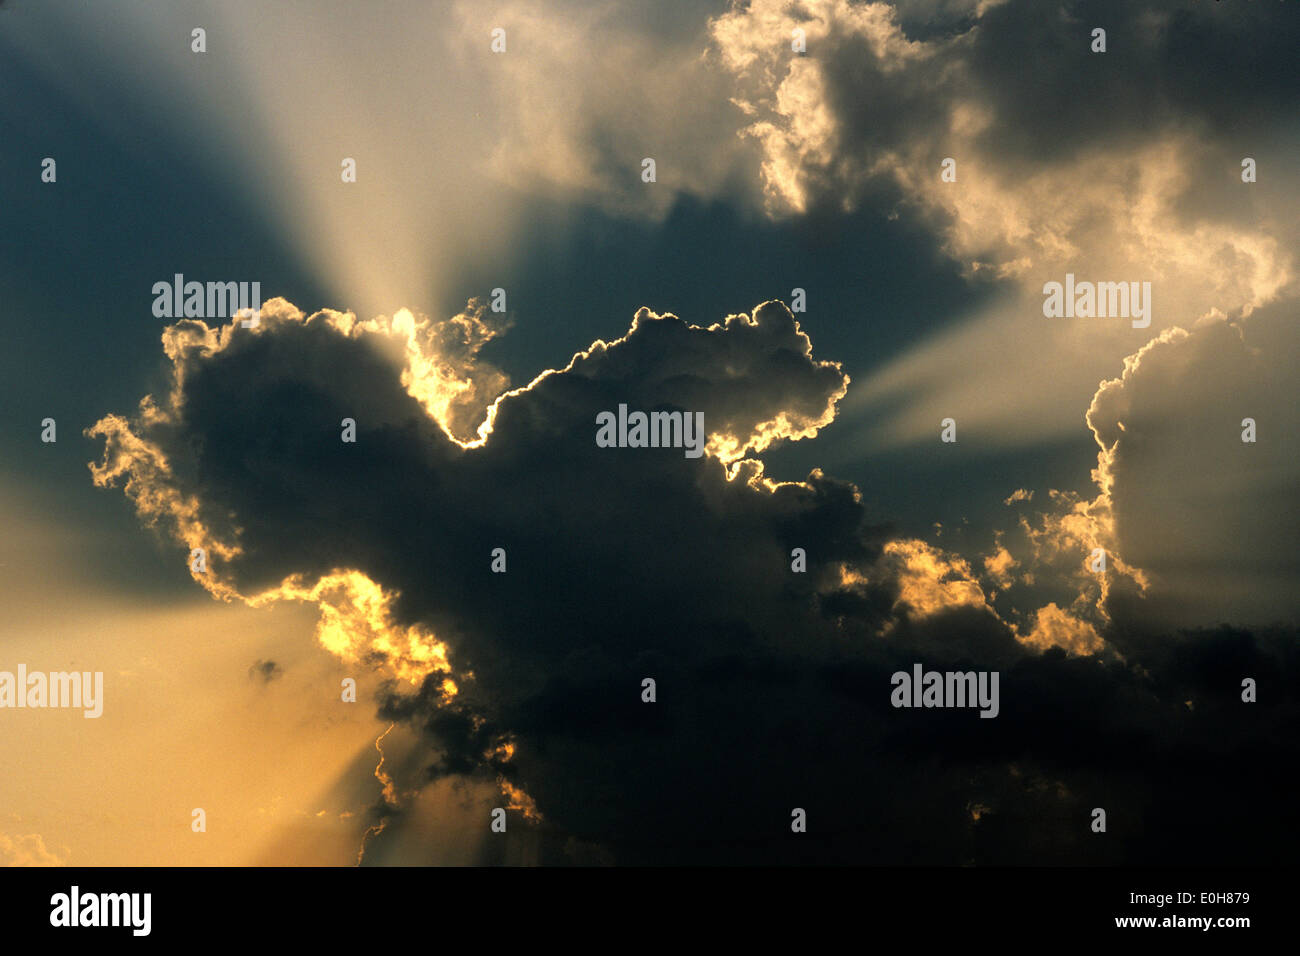 Sunbeams, sunburst, sun rays behind clouds in a dramatic sky Stock Photo